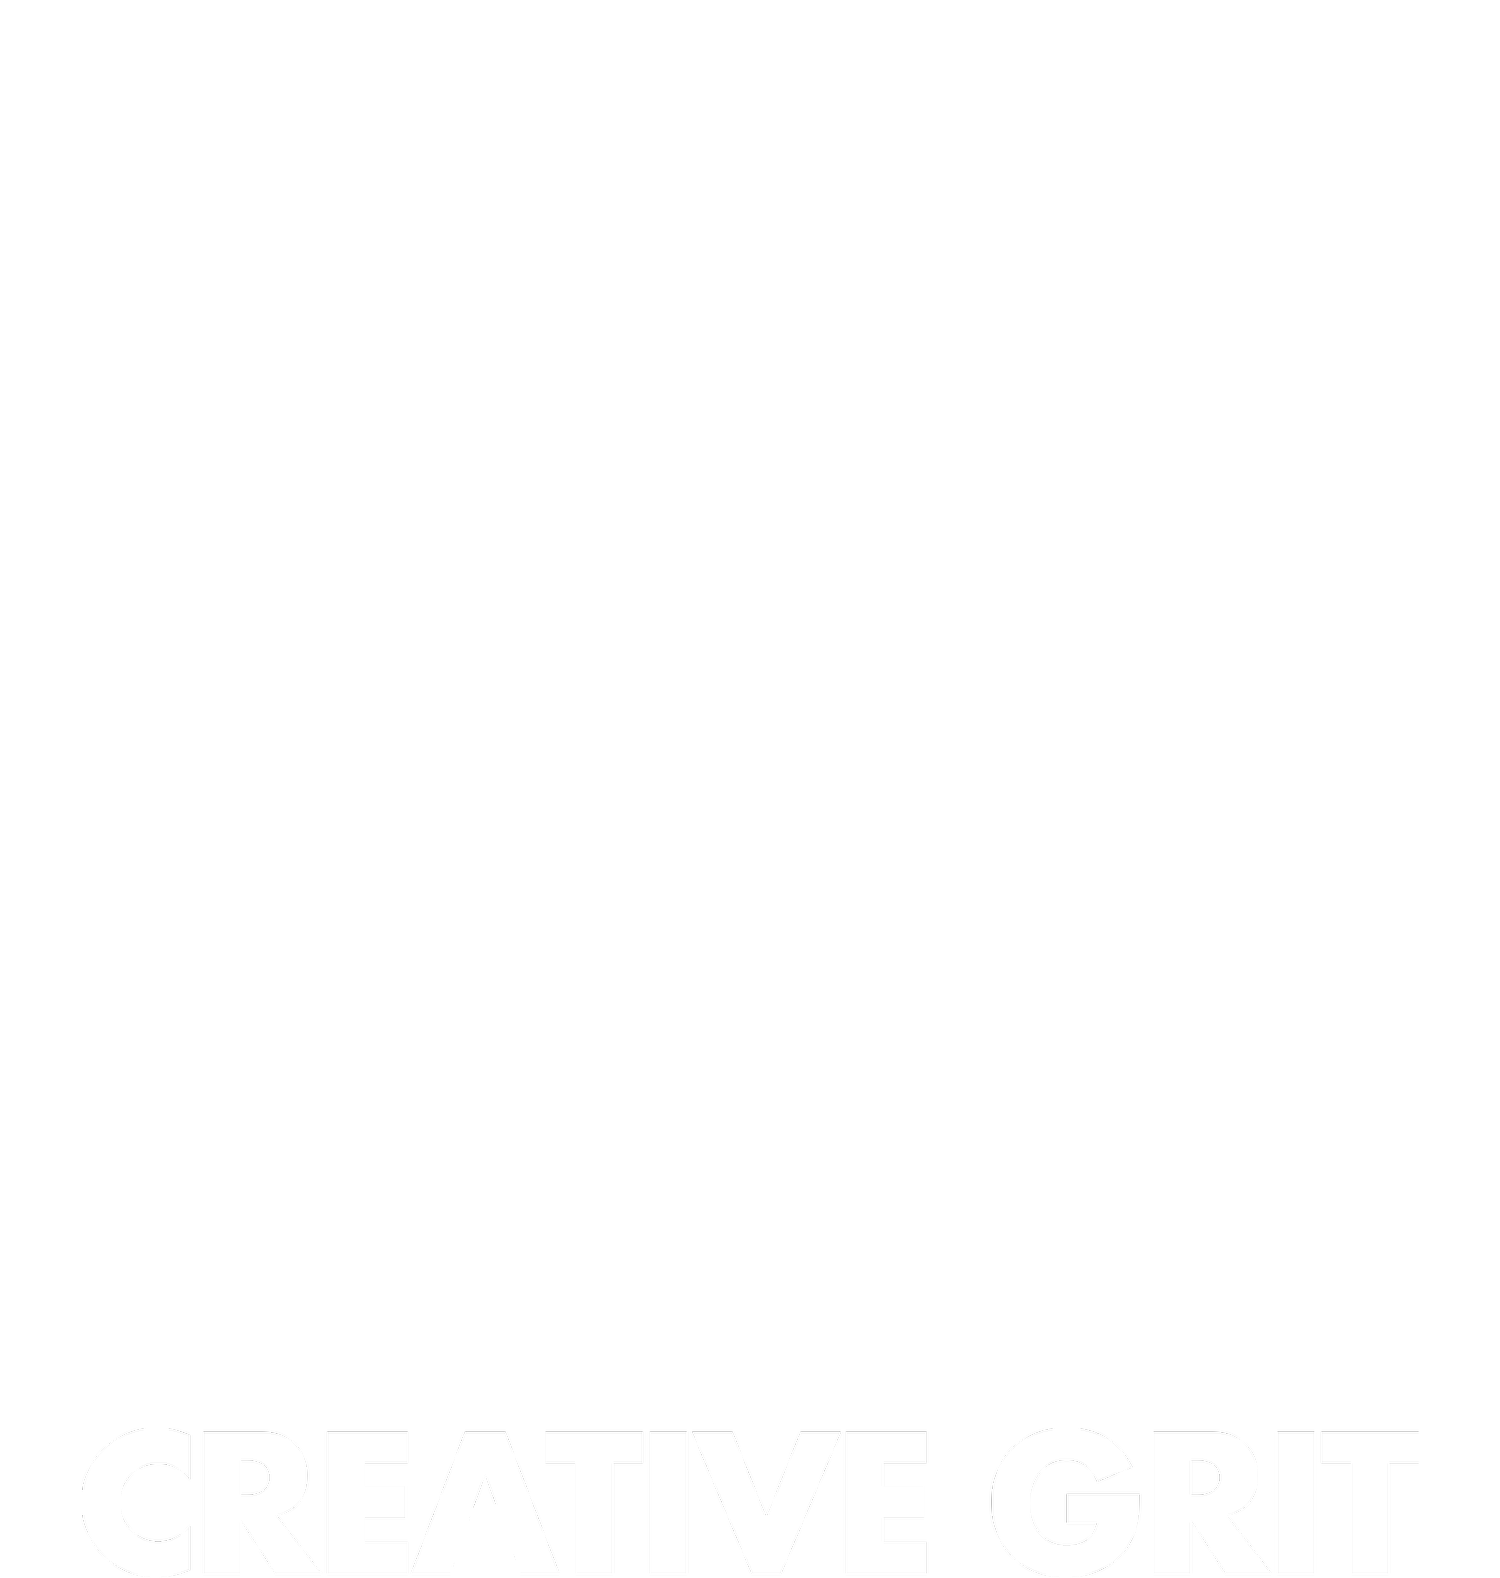 CREATIVE GRIT